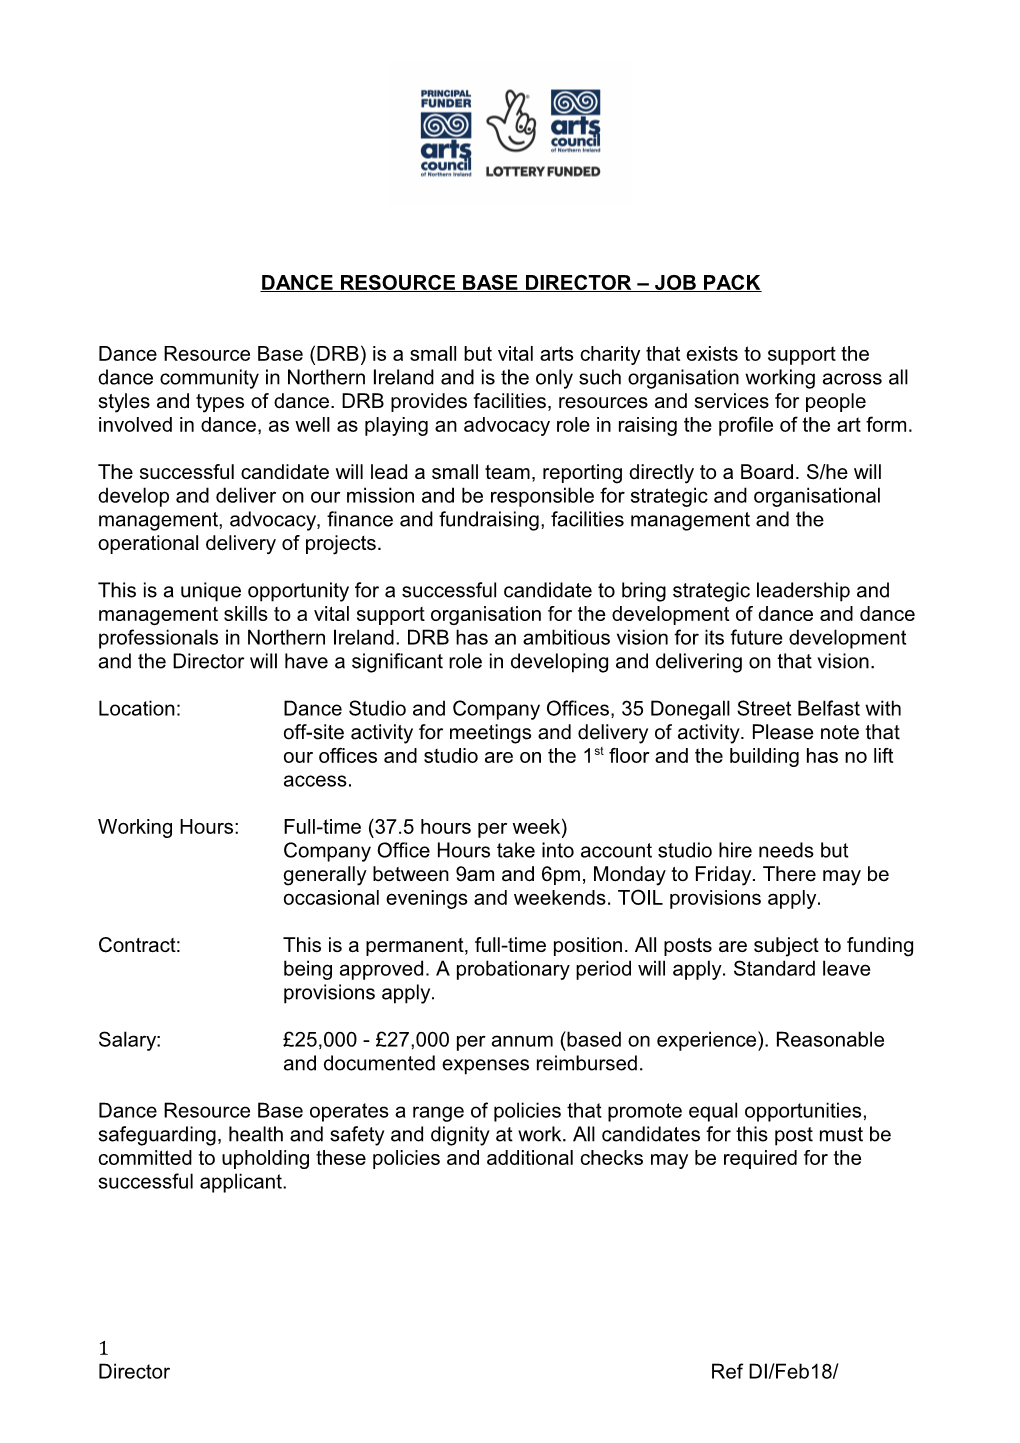 Dance Resource Base Director Job Pack